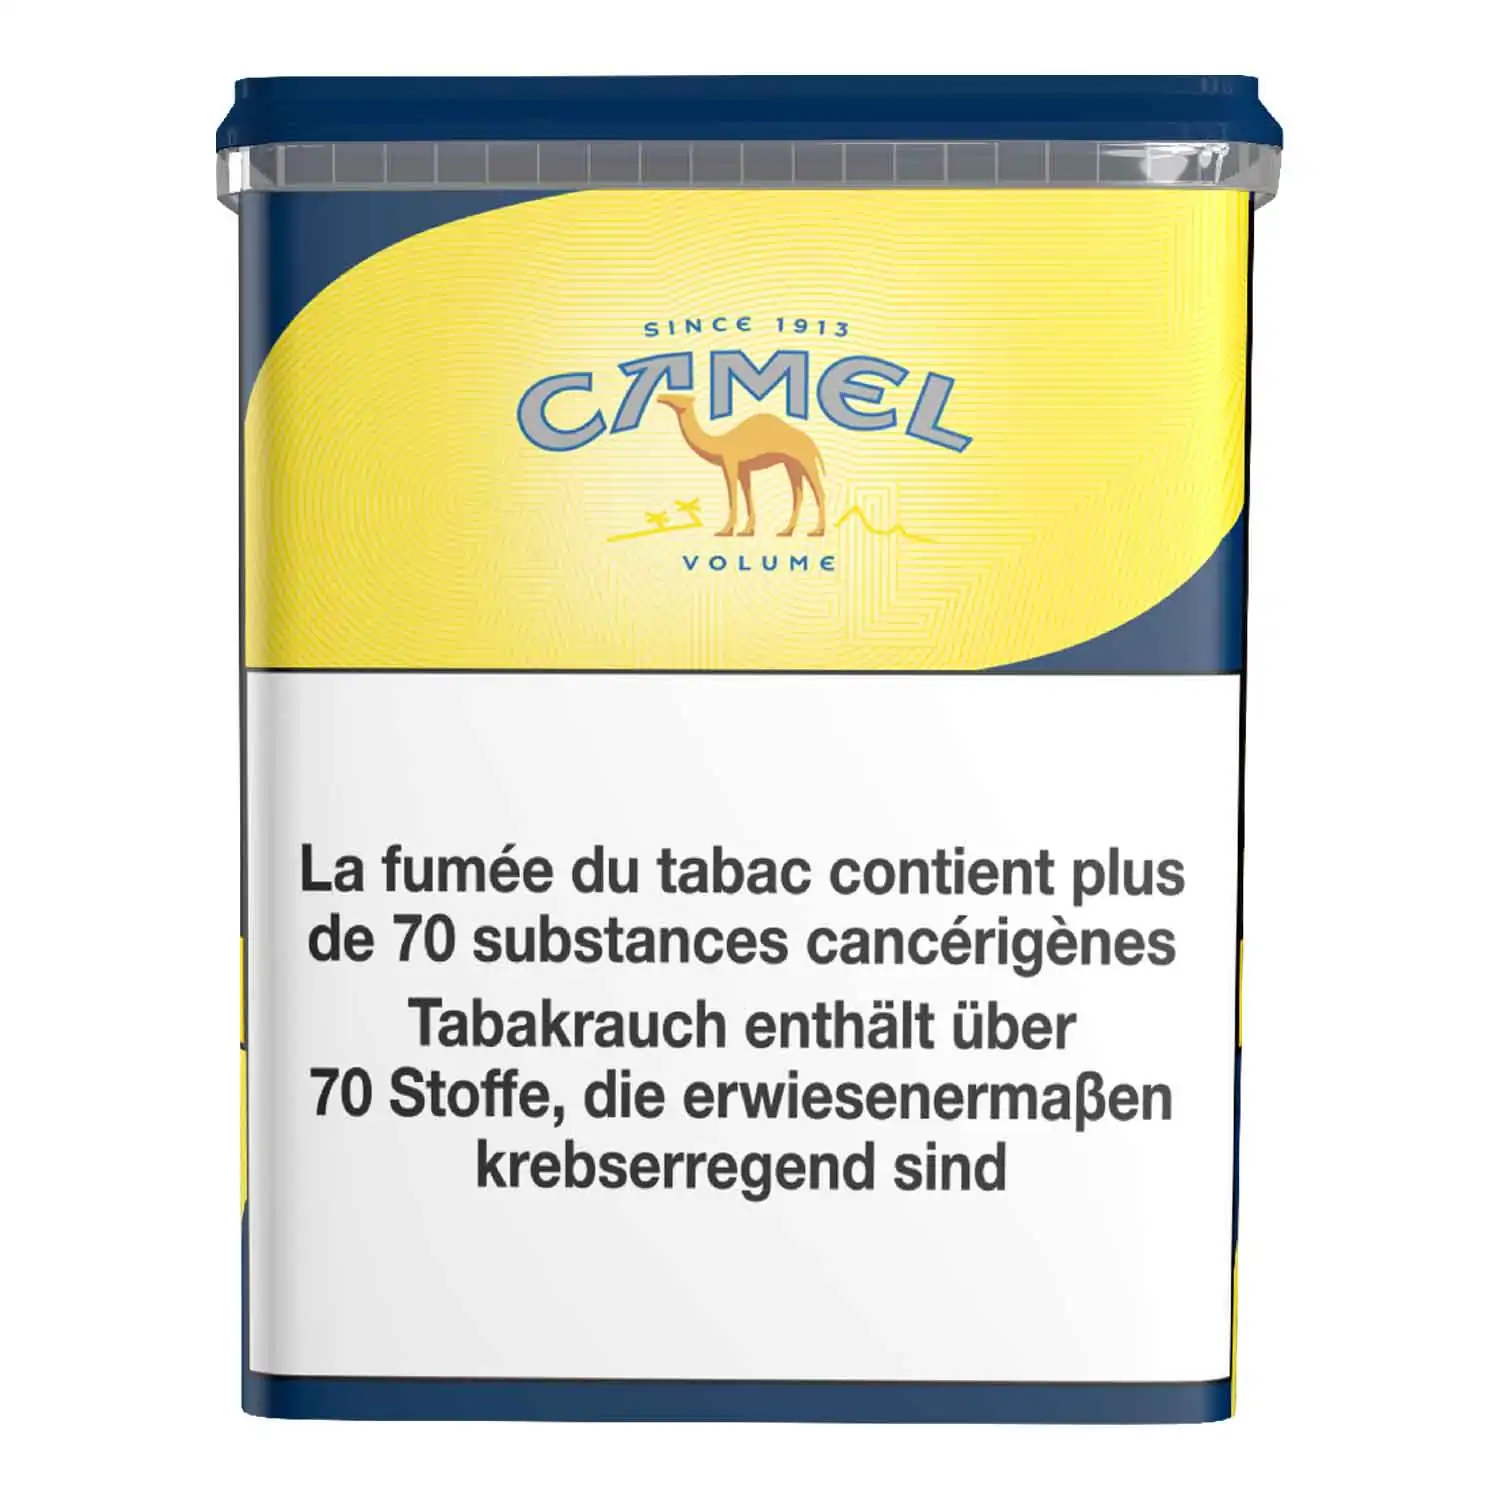 Camel volume jaune 650g - Buy at Real Tobacco